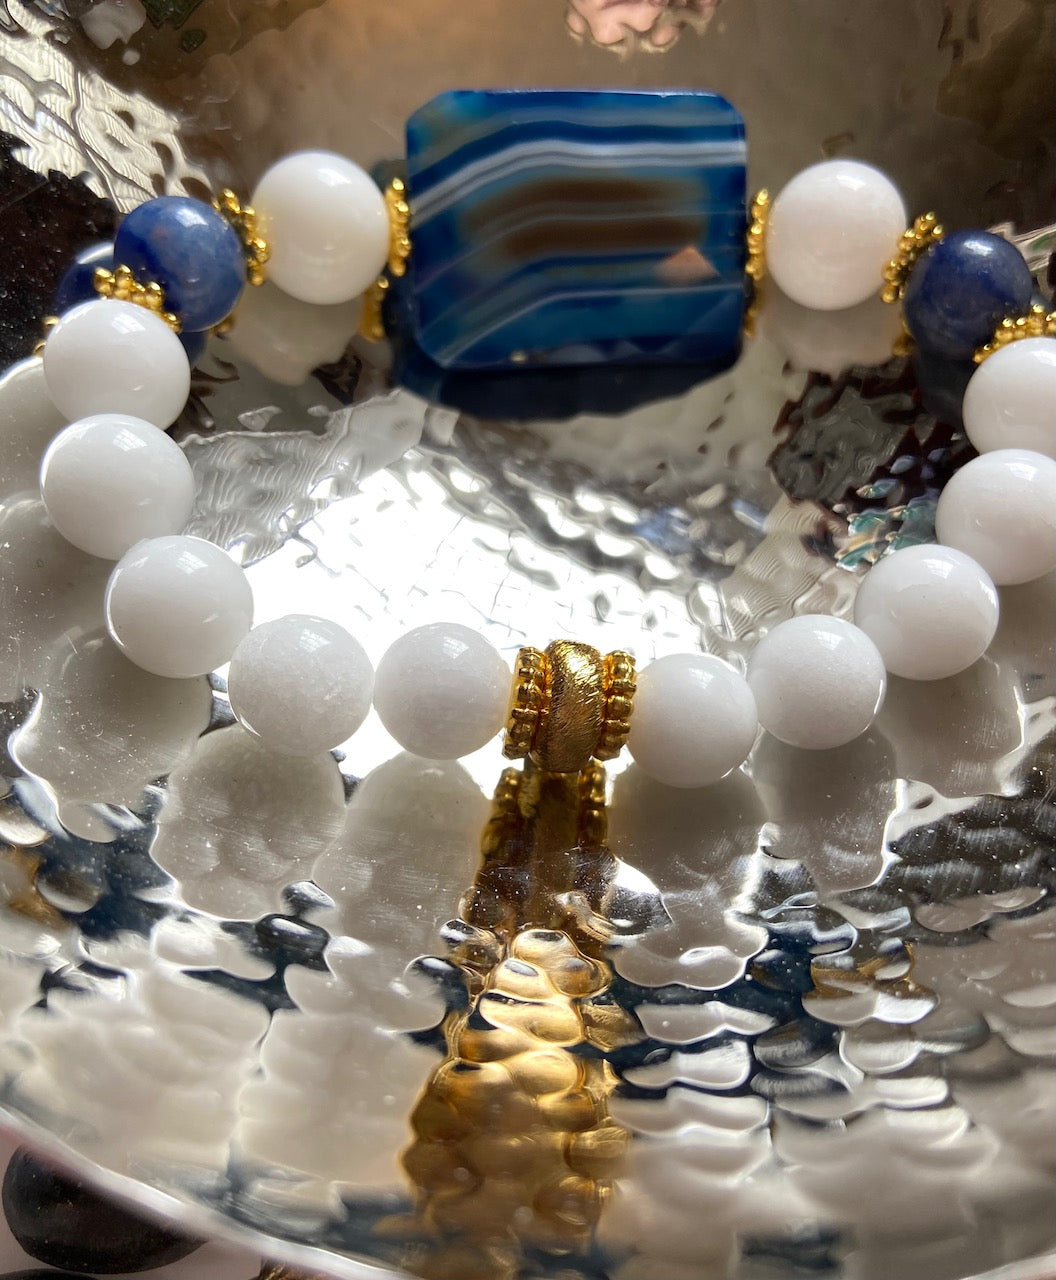 Blue-Striped Onyx, Alabaster and Sodalite Beaded Bracelet